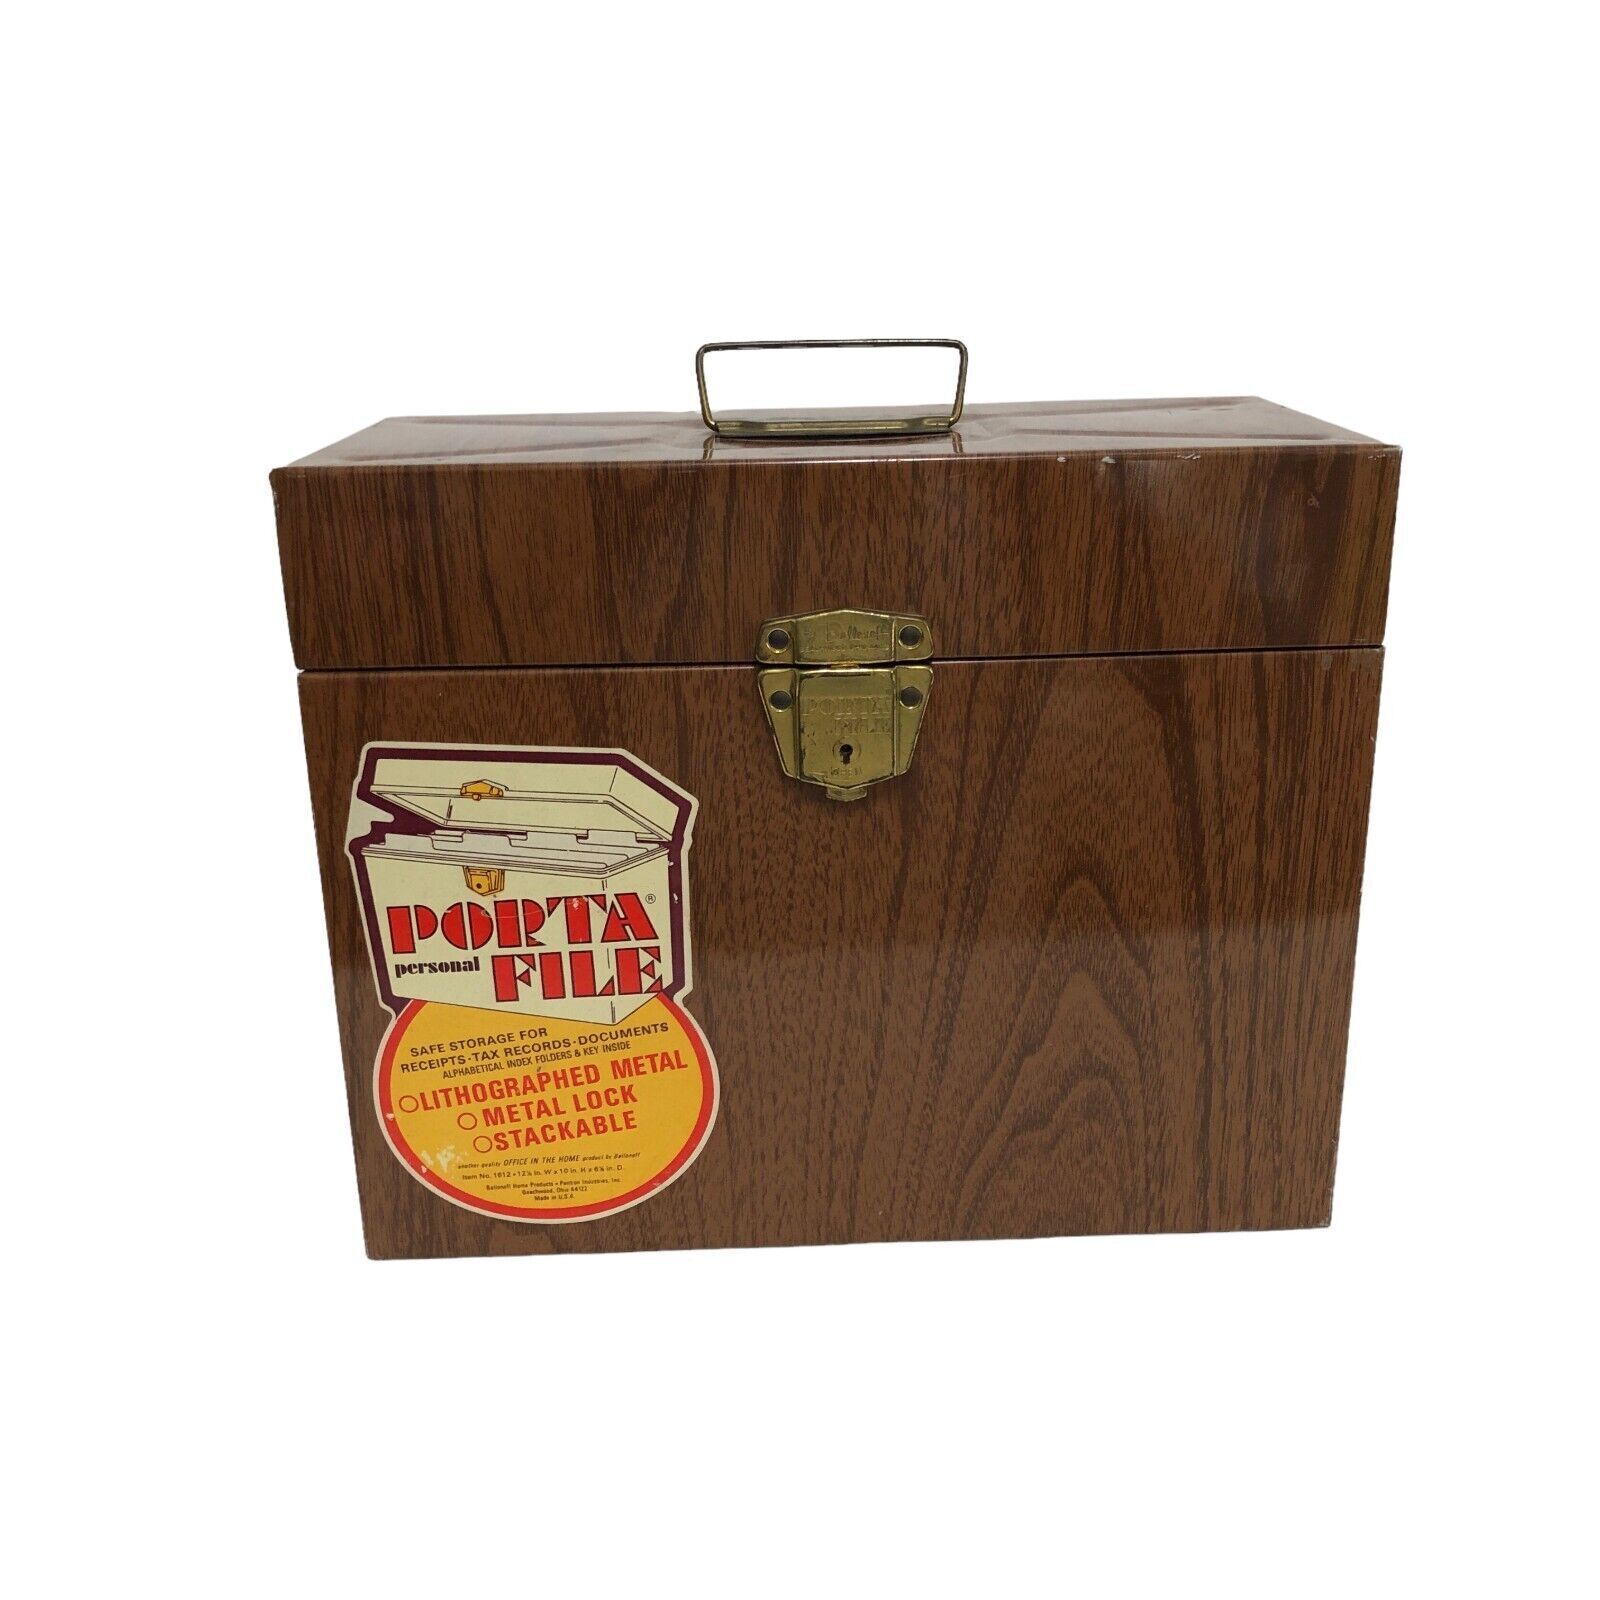 Vintage Porta-File Metal File Box Litho Wood Grain Metal Industrial Storage USA